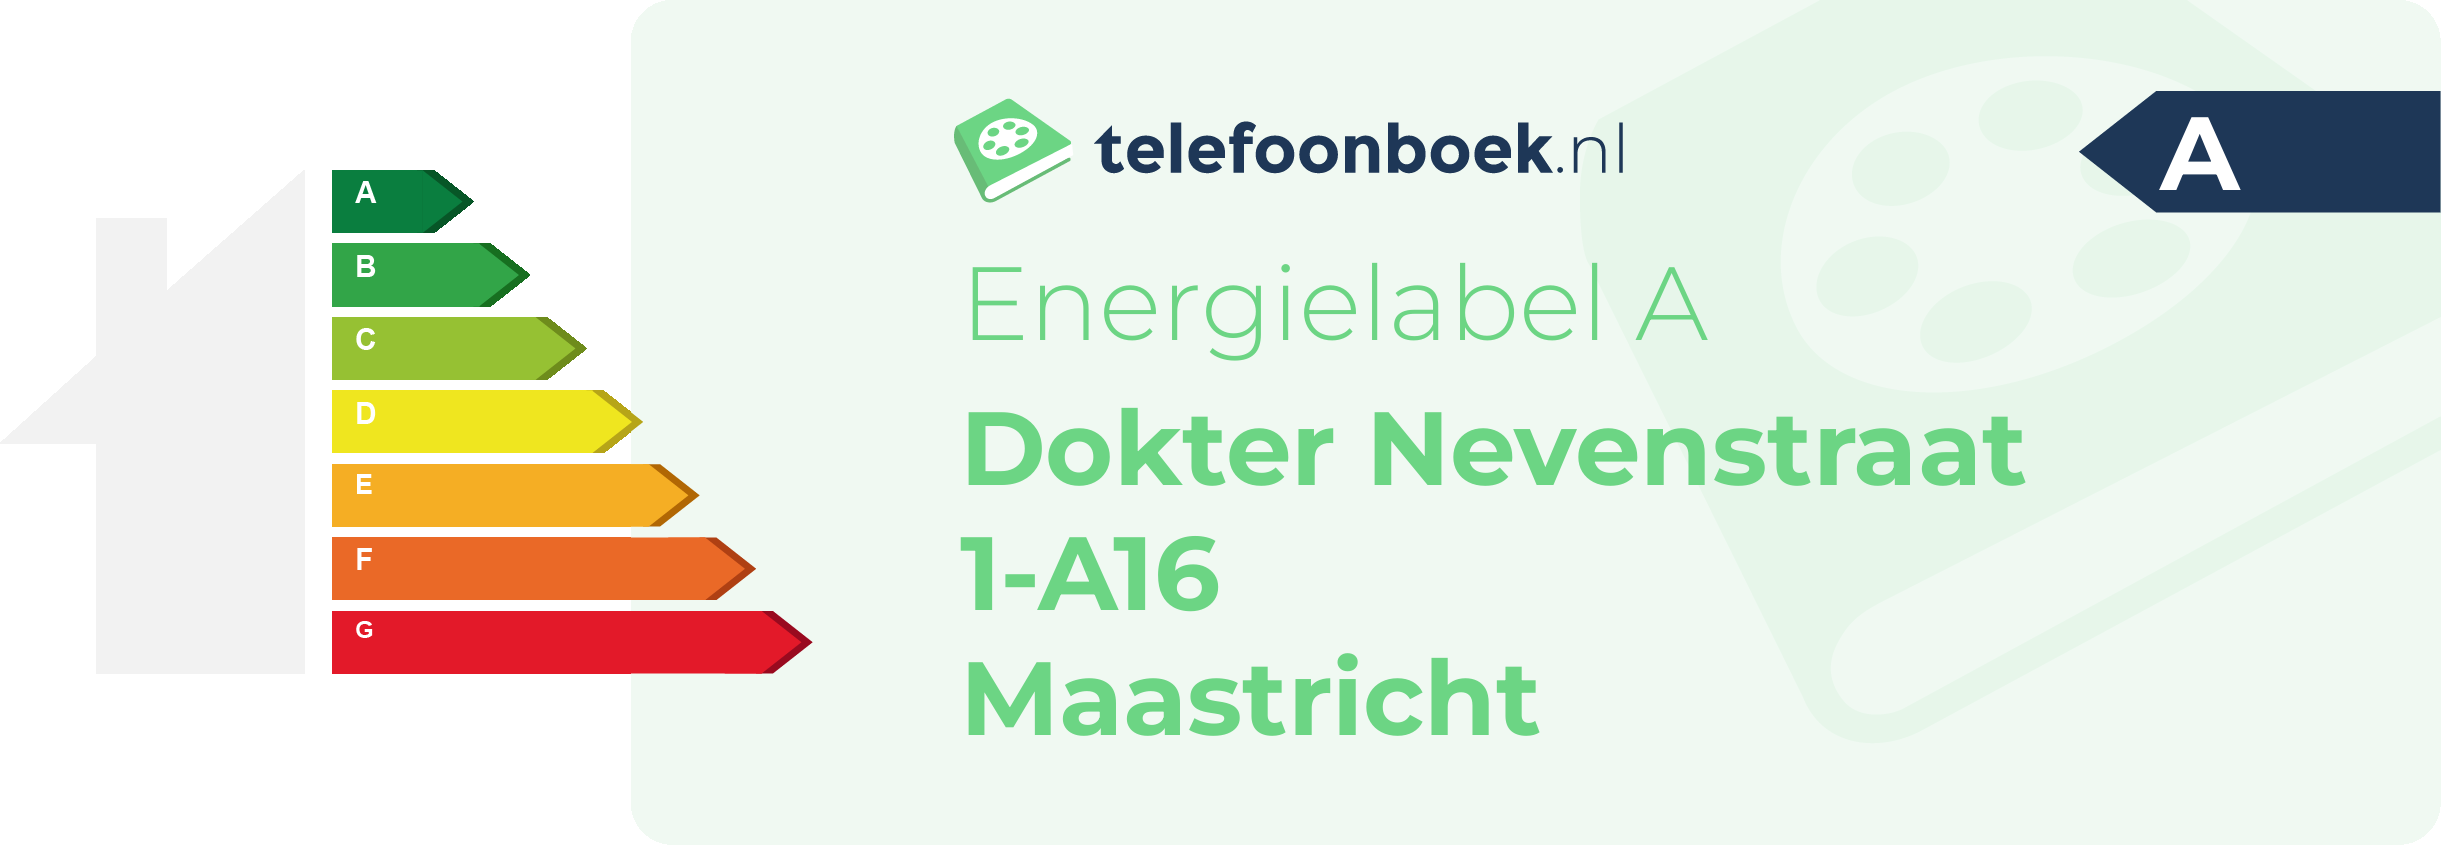 Energielabel Dokter Nevenstraat 1-A16 Maastricht